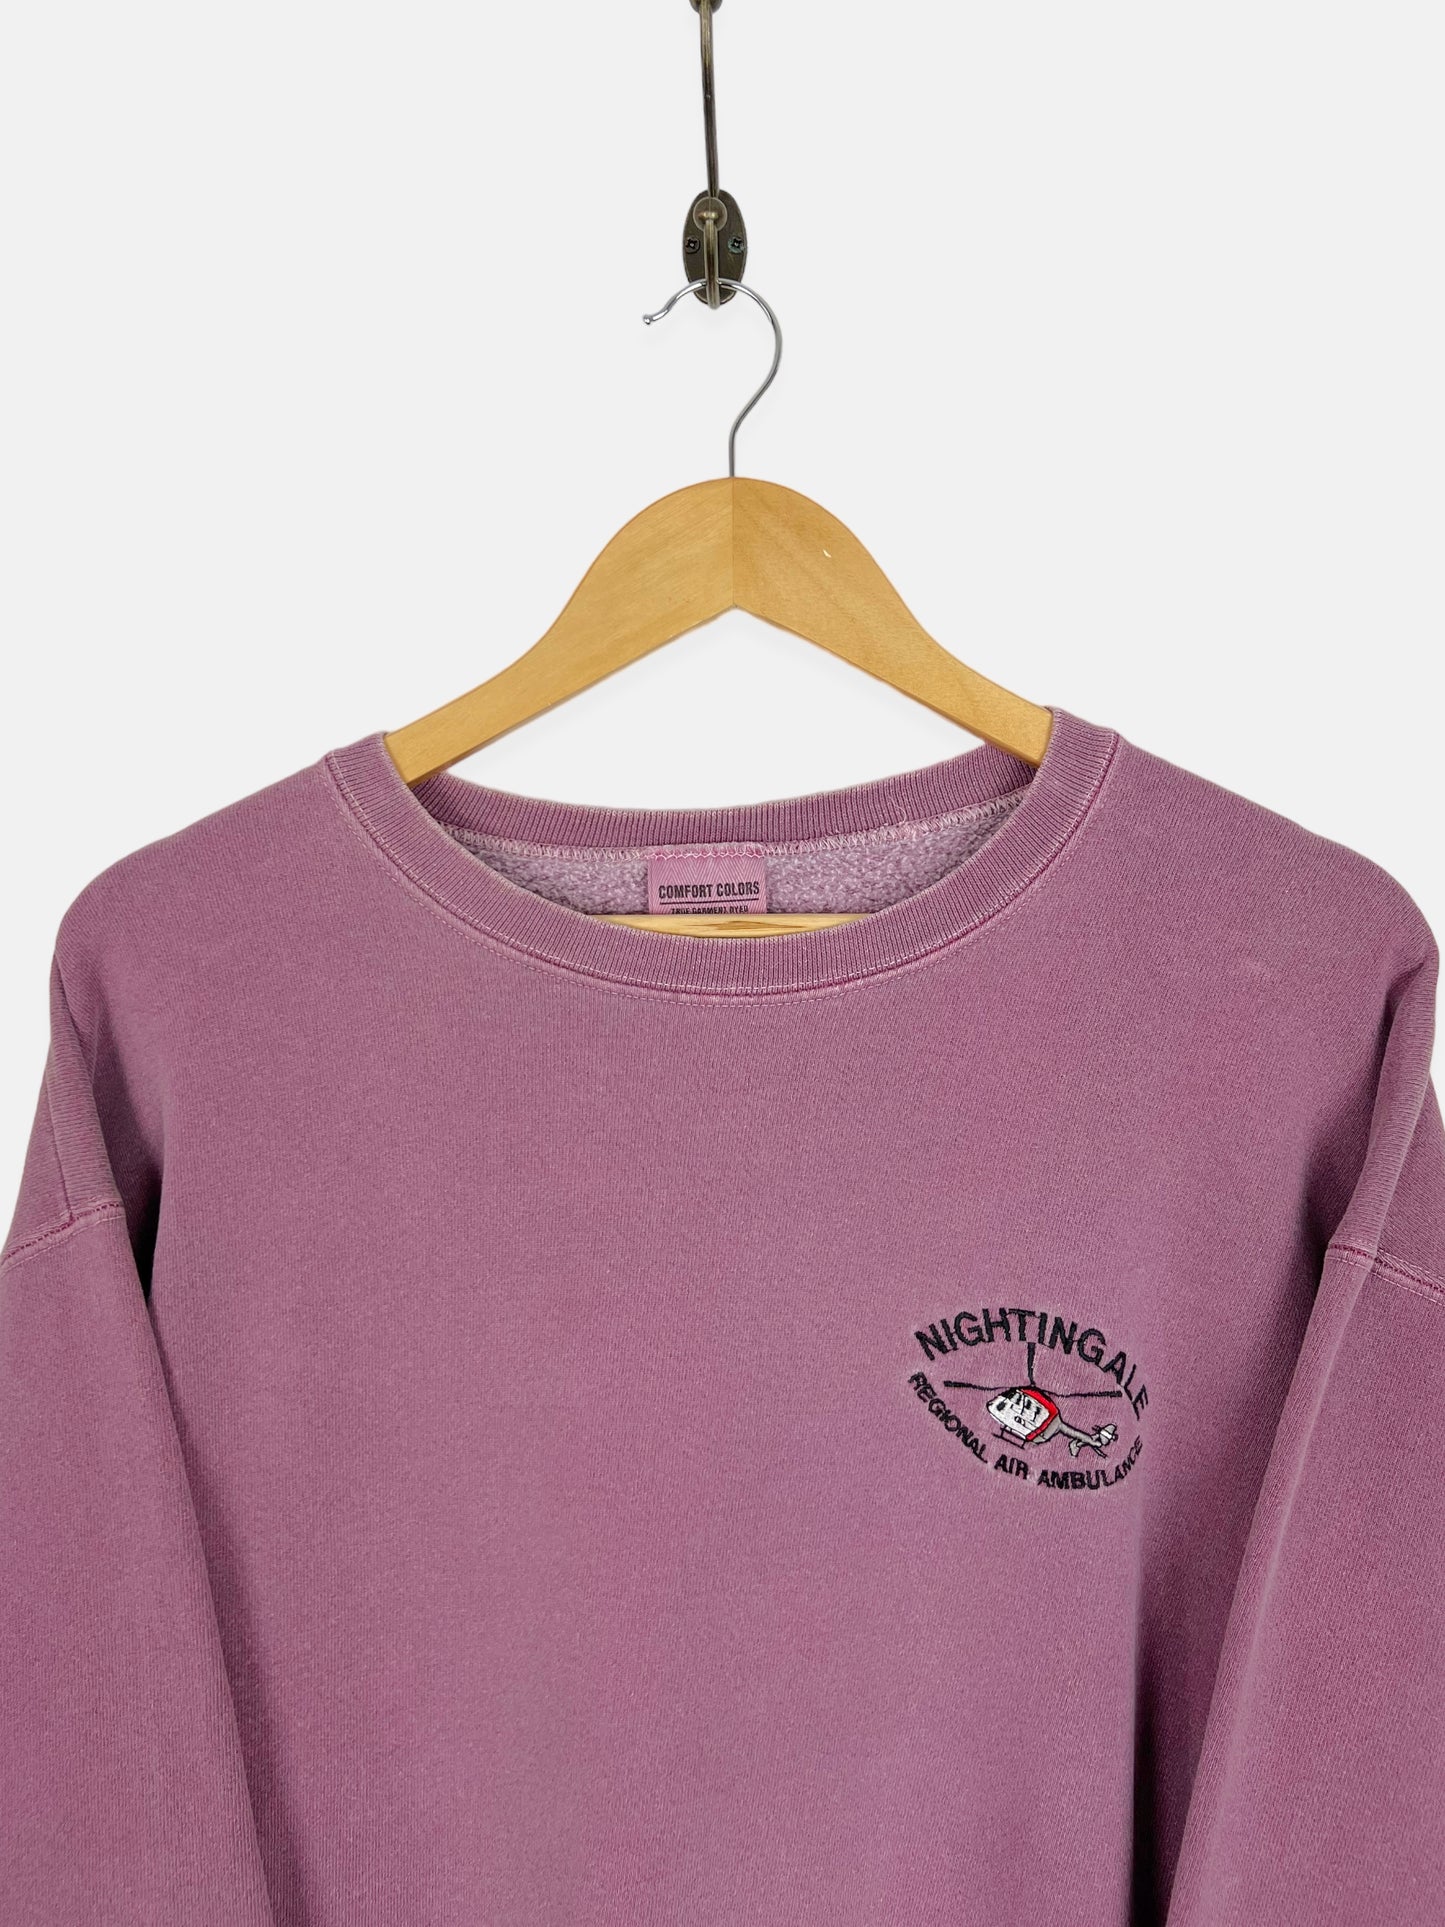 90's Nightingale Air Ambulance USA Made Embroidered Vintage Sweatshirt Size XL